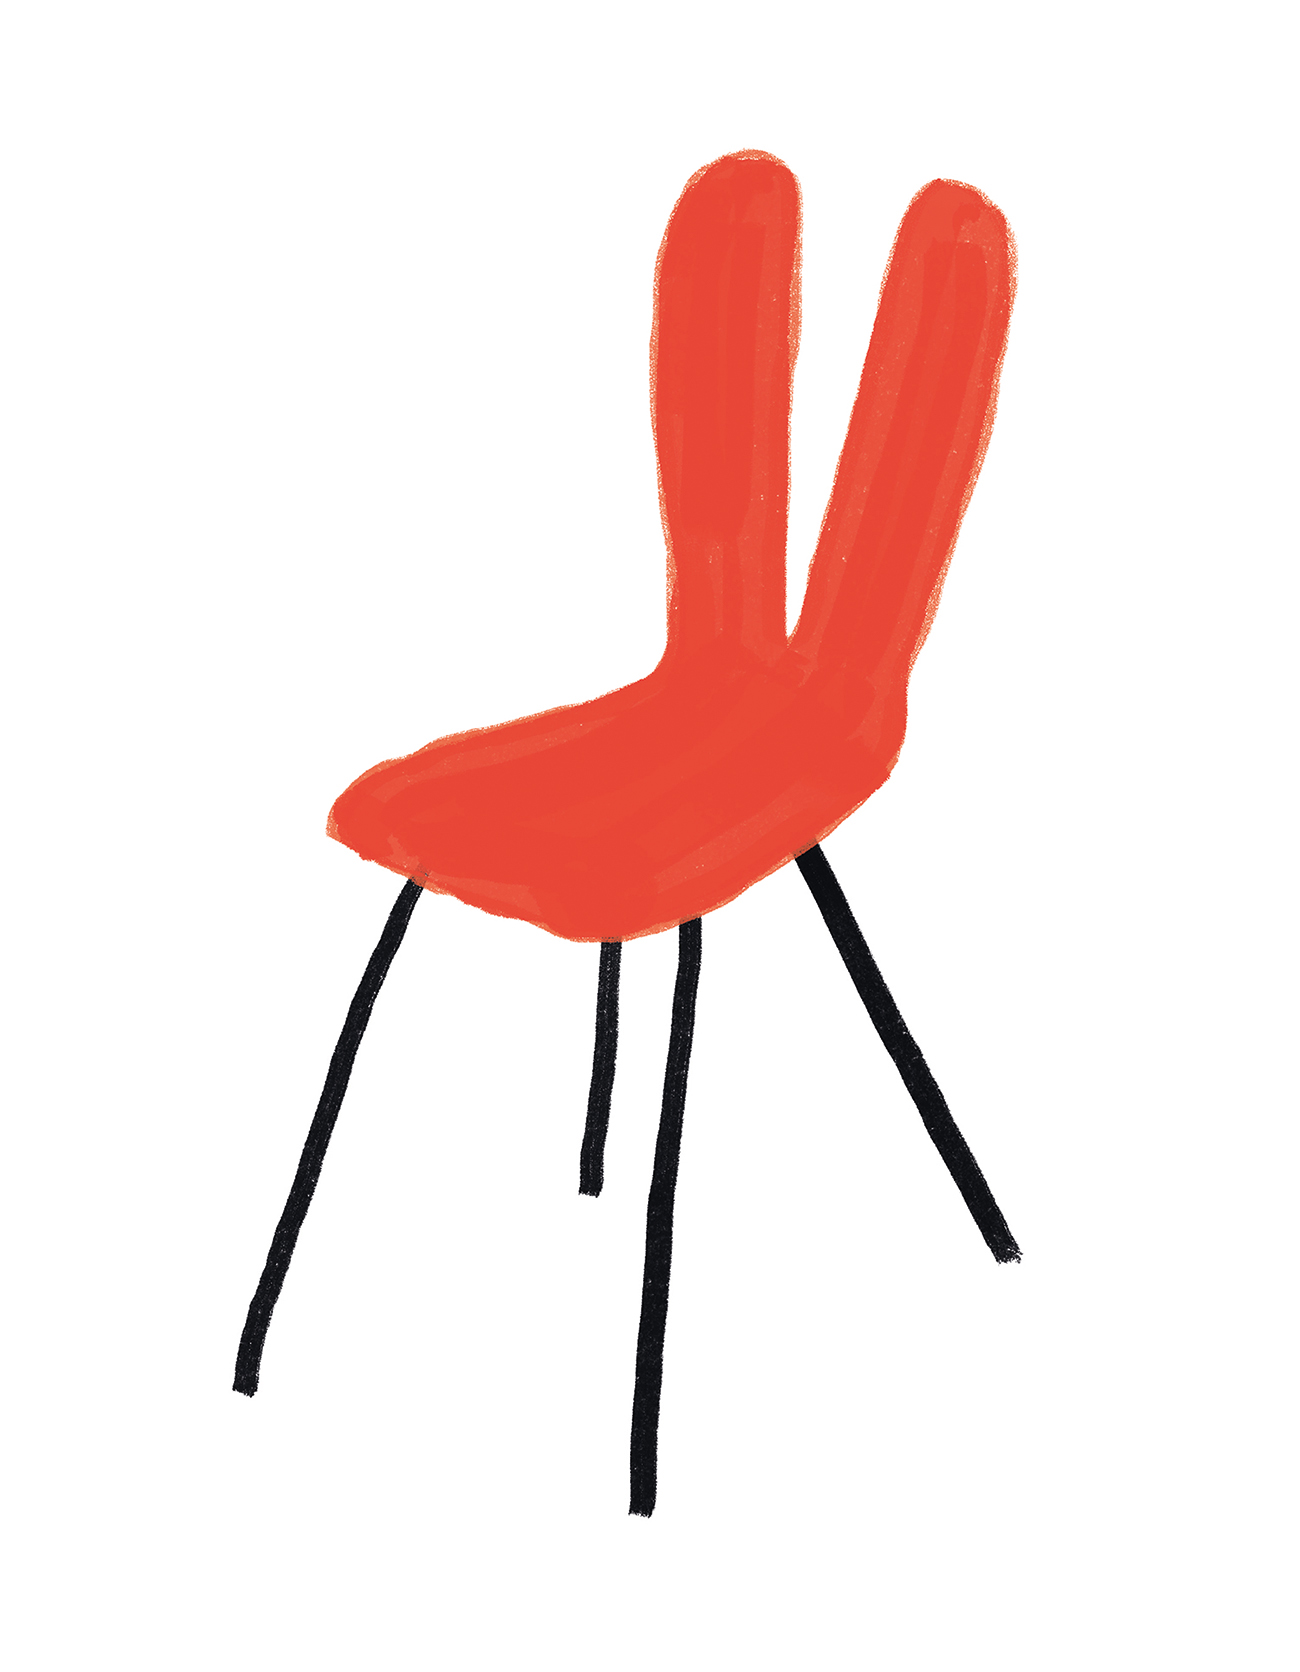 interior-design-women-feminist-chair-obect-Kazuyo-Sejima-chair-illustration-violeta-noy